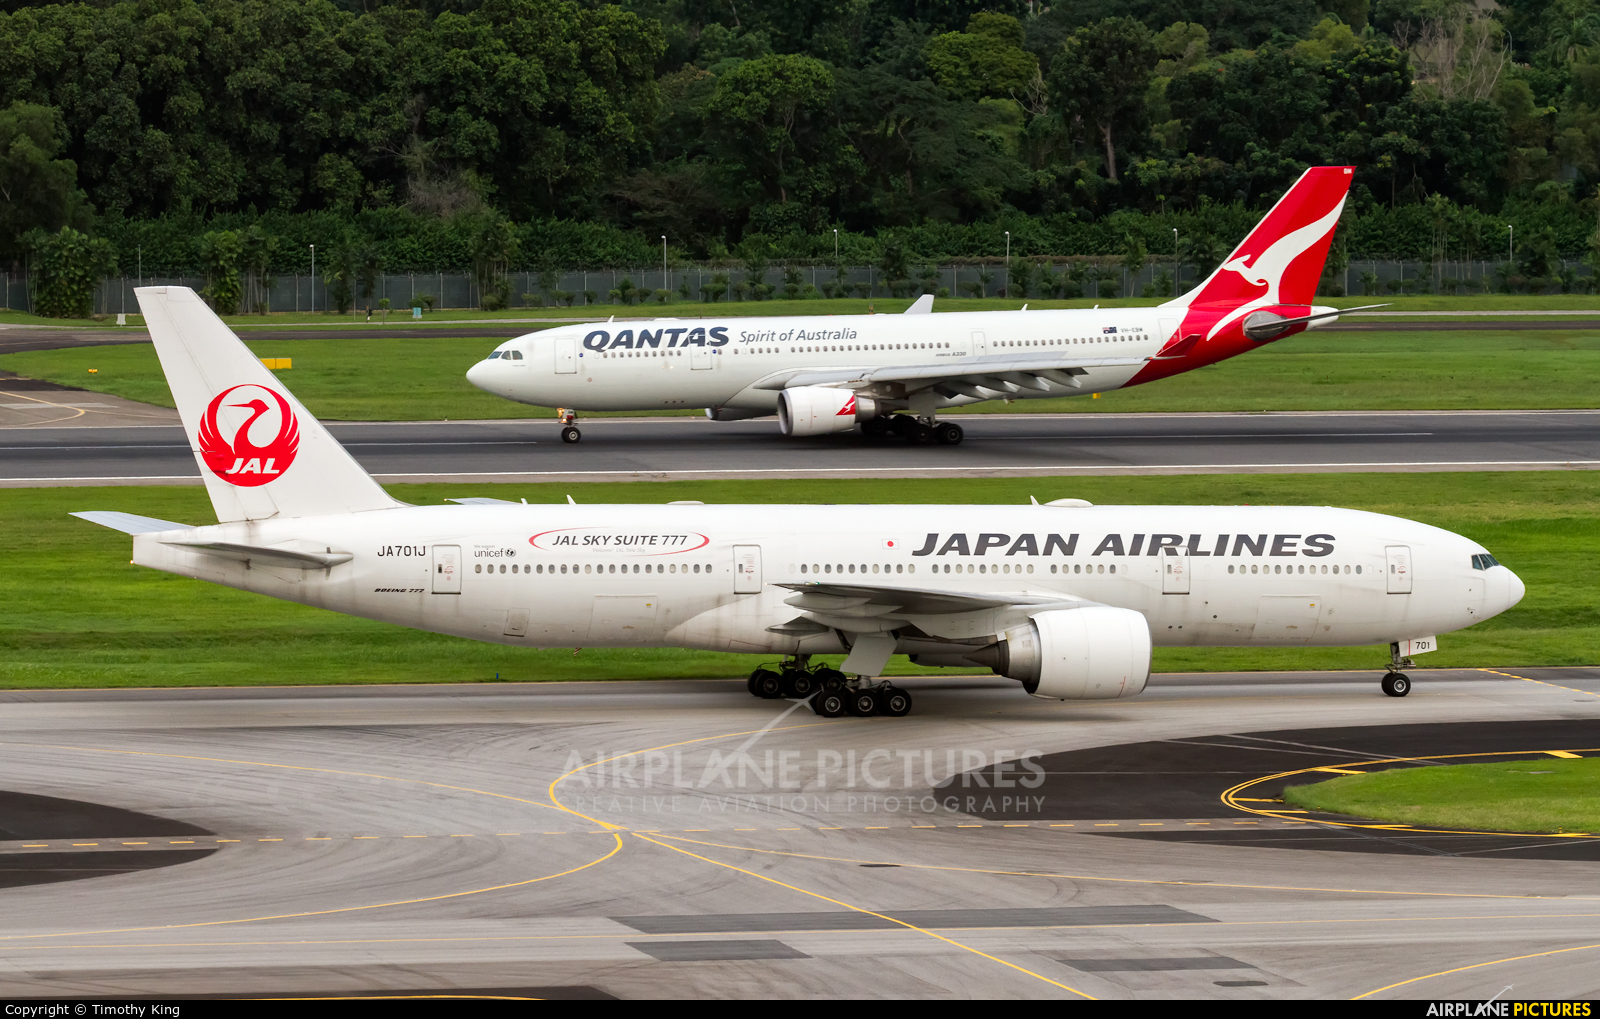 JAL - Japan Airlines JA701J aircraft at Singapore - Changi